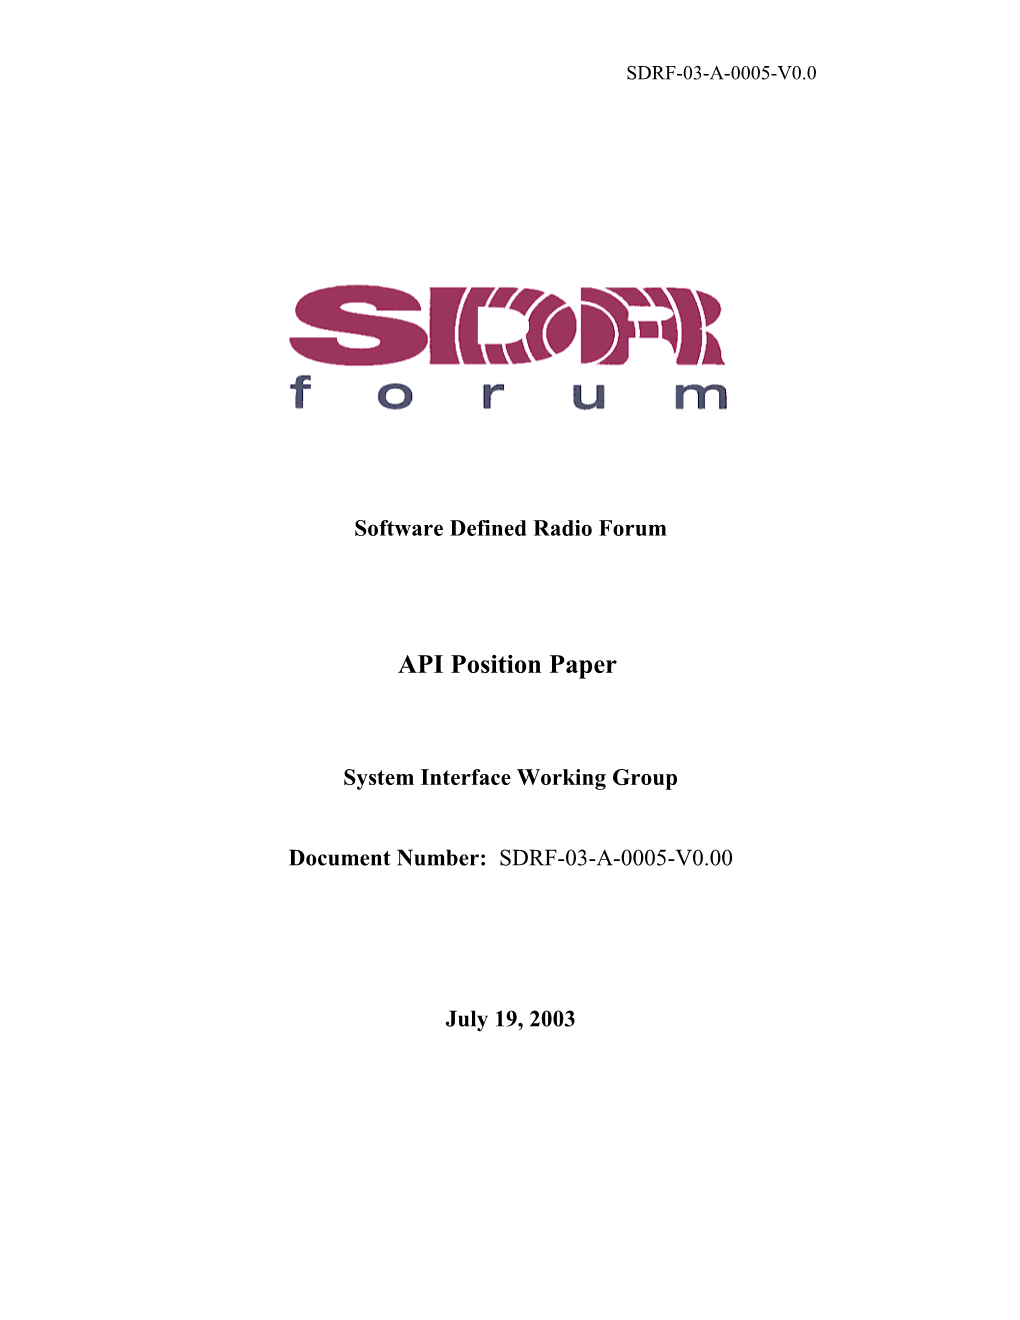 API Position Paper